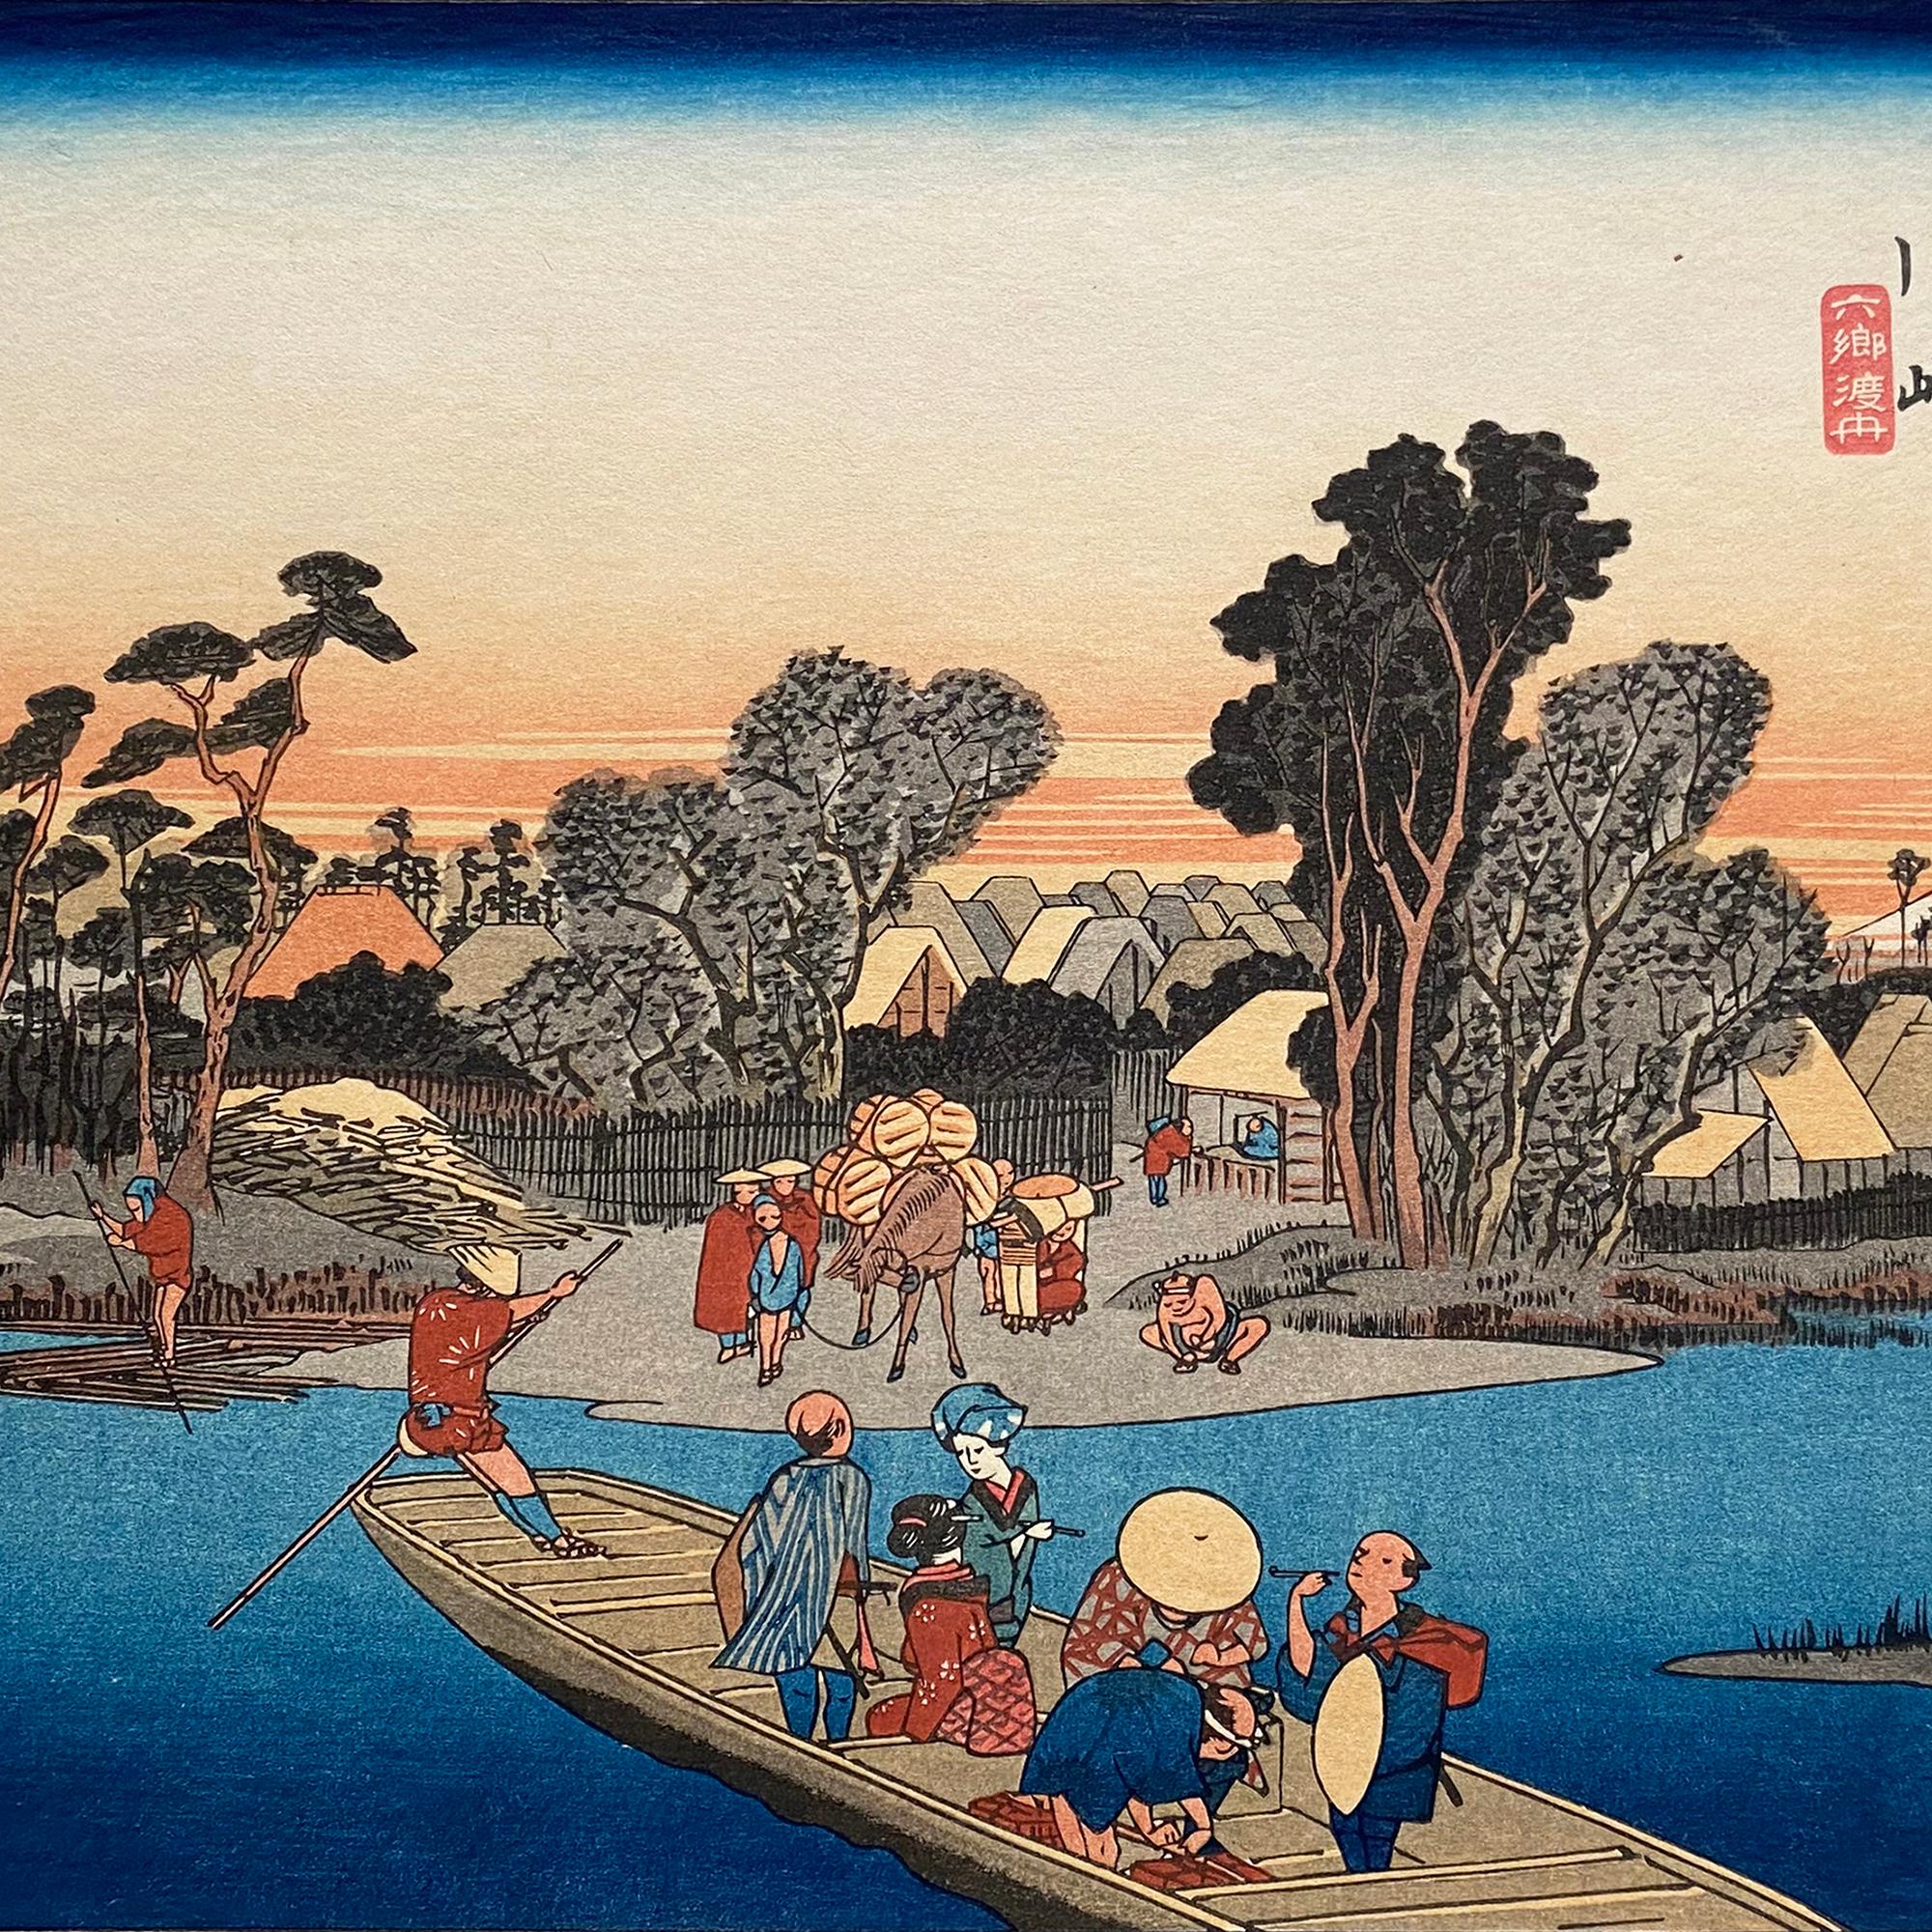 'A View of Kawasaki', After Utagawa Hiroshige 歌川廣重, Ukiyo-e Woodblock, Tokaido - Beige Landscape Print by Utagawa Hiroshige (Ando Hiroshige)